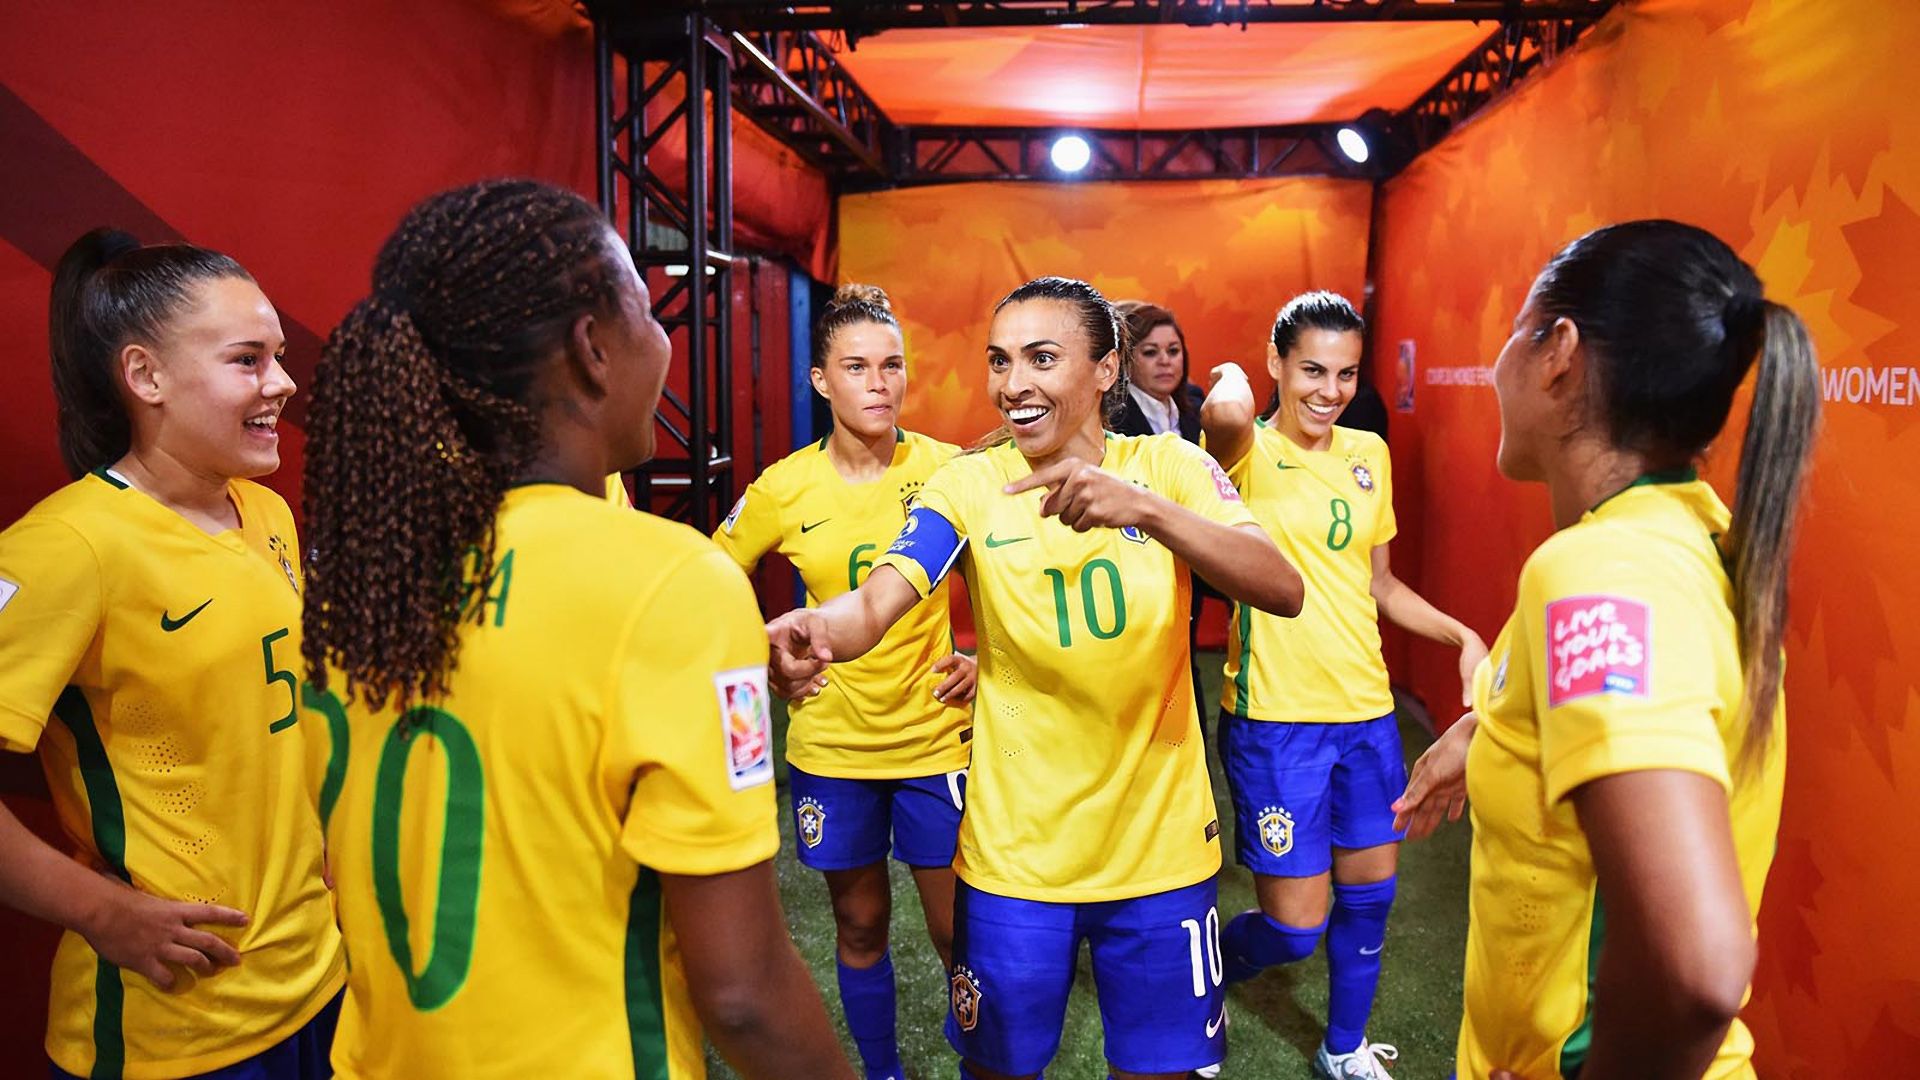 Download 1920x1080 Brazil Women's Football Team Nike 2015 Home Kit Wallpaper